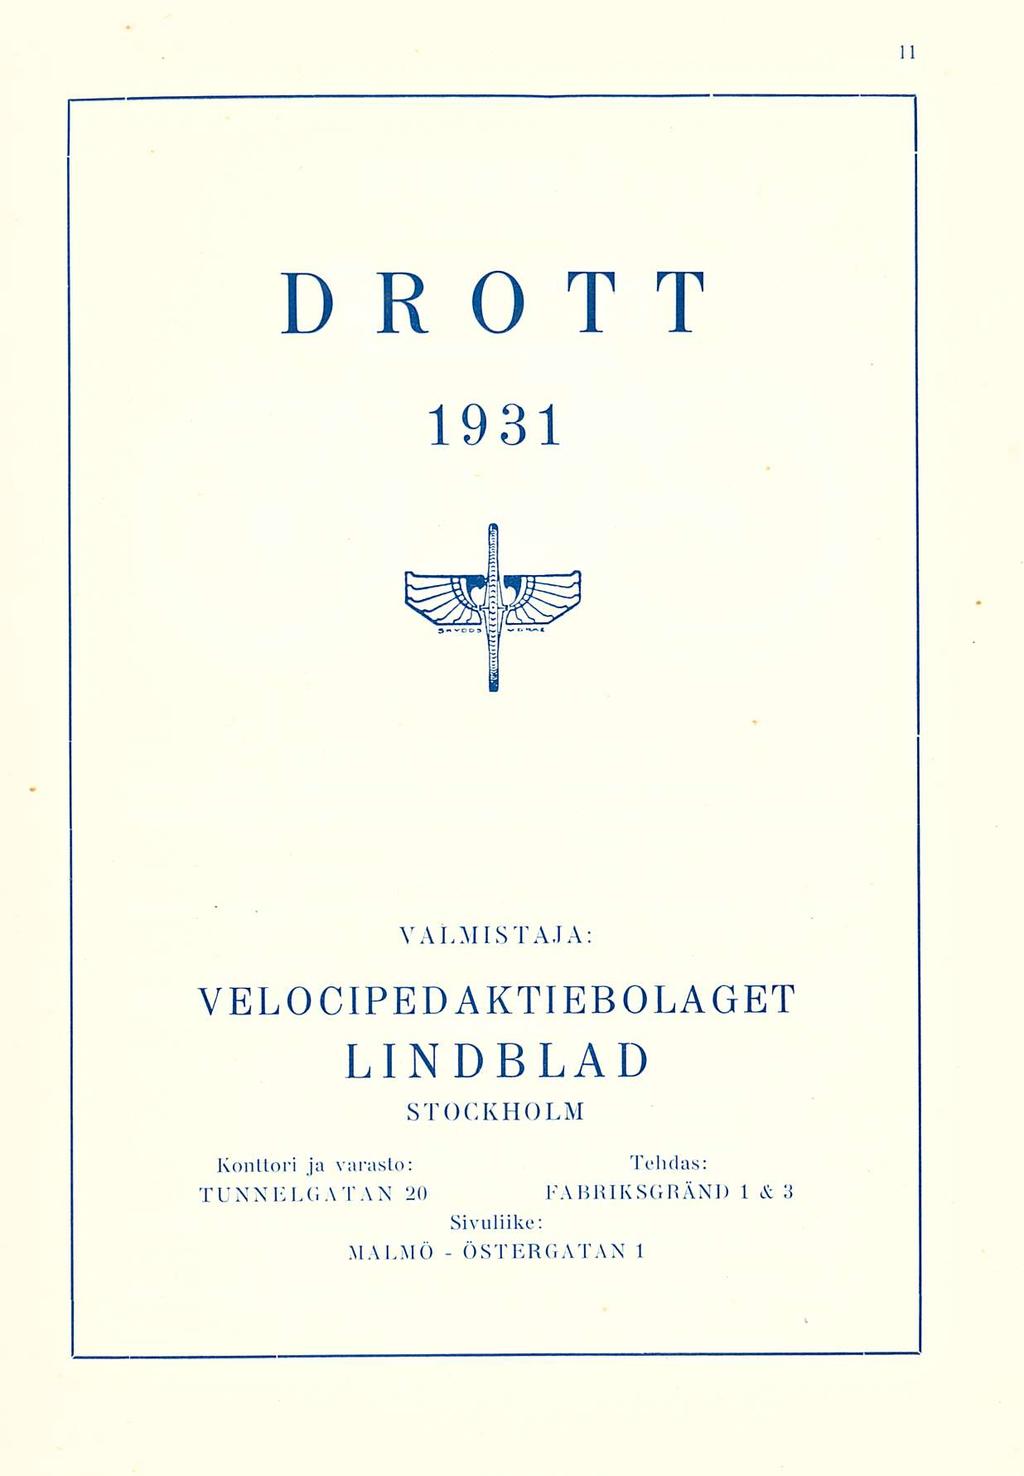 ÖSTERGATAN DRO T T 1931 VALMISTAJA: VELOCIPED AKTIEBOLAGET LINDBLAD STOCKHOLM